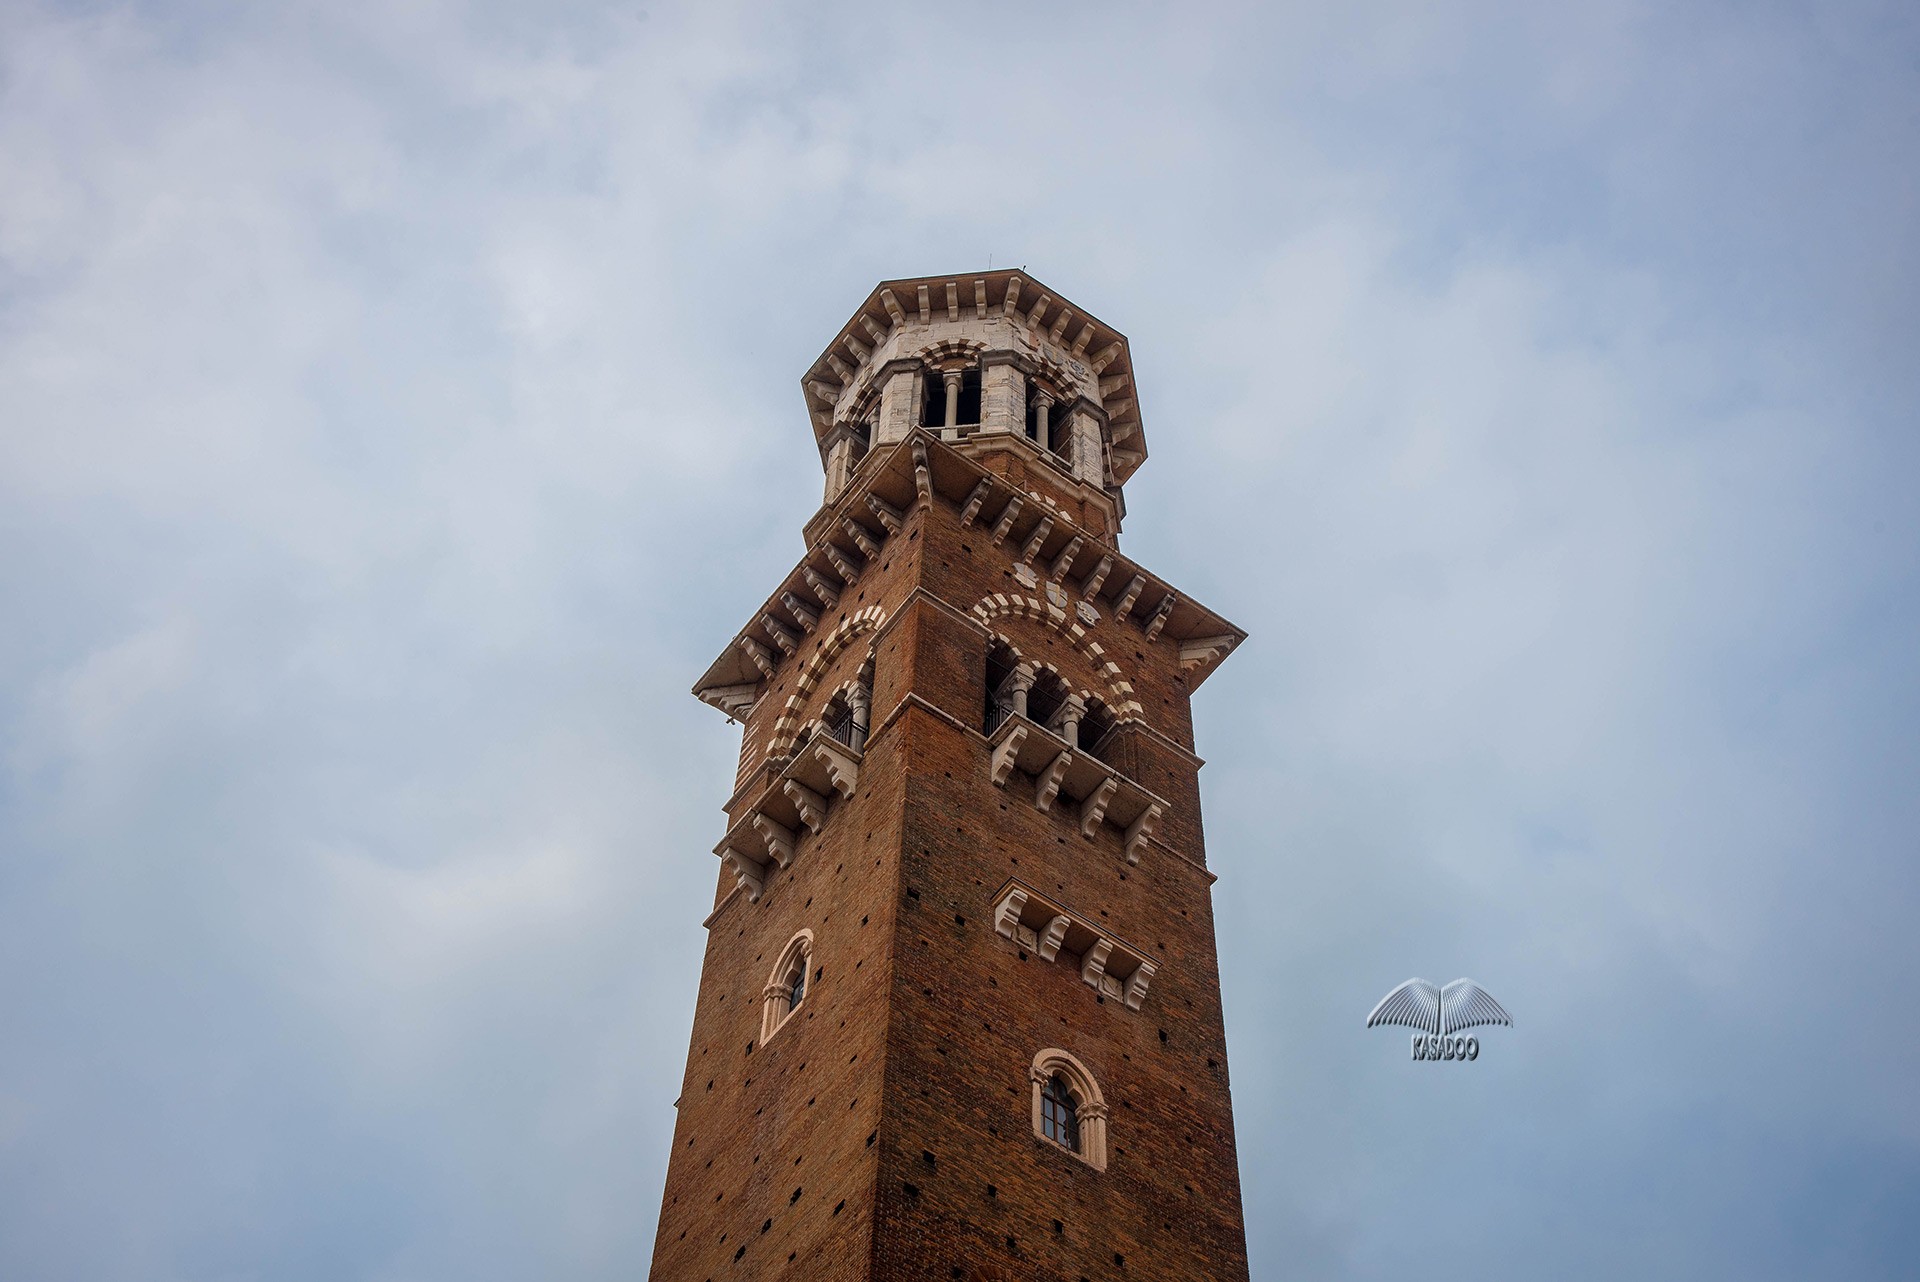 The top of the Tower Lamberti